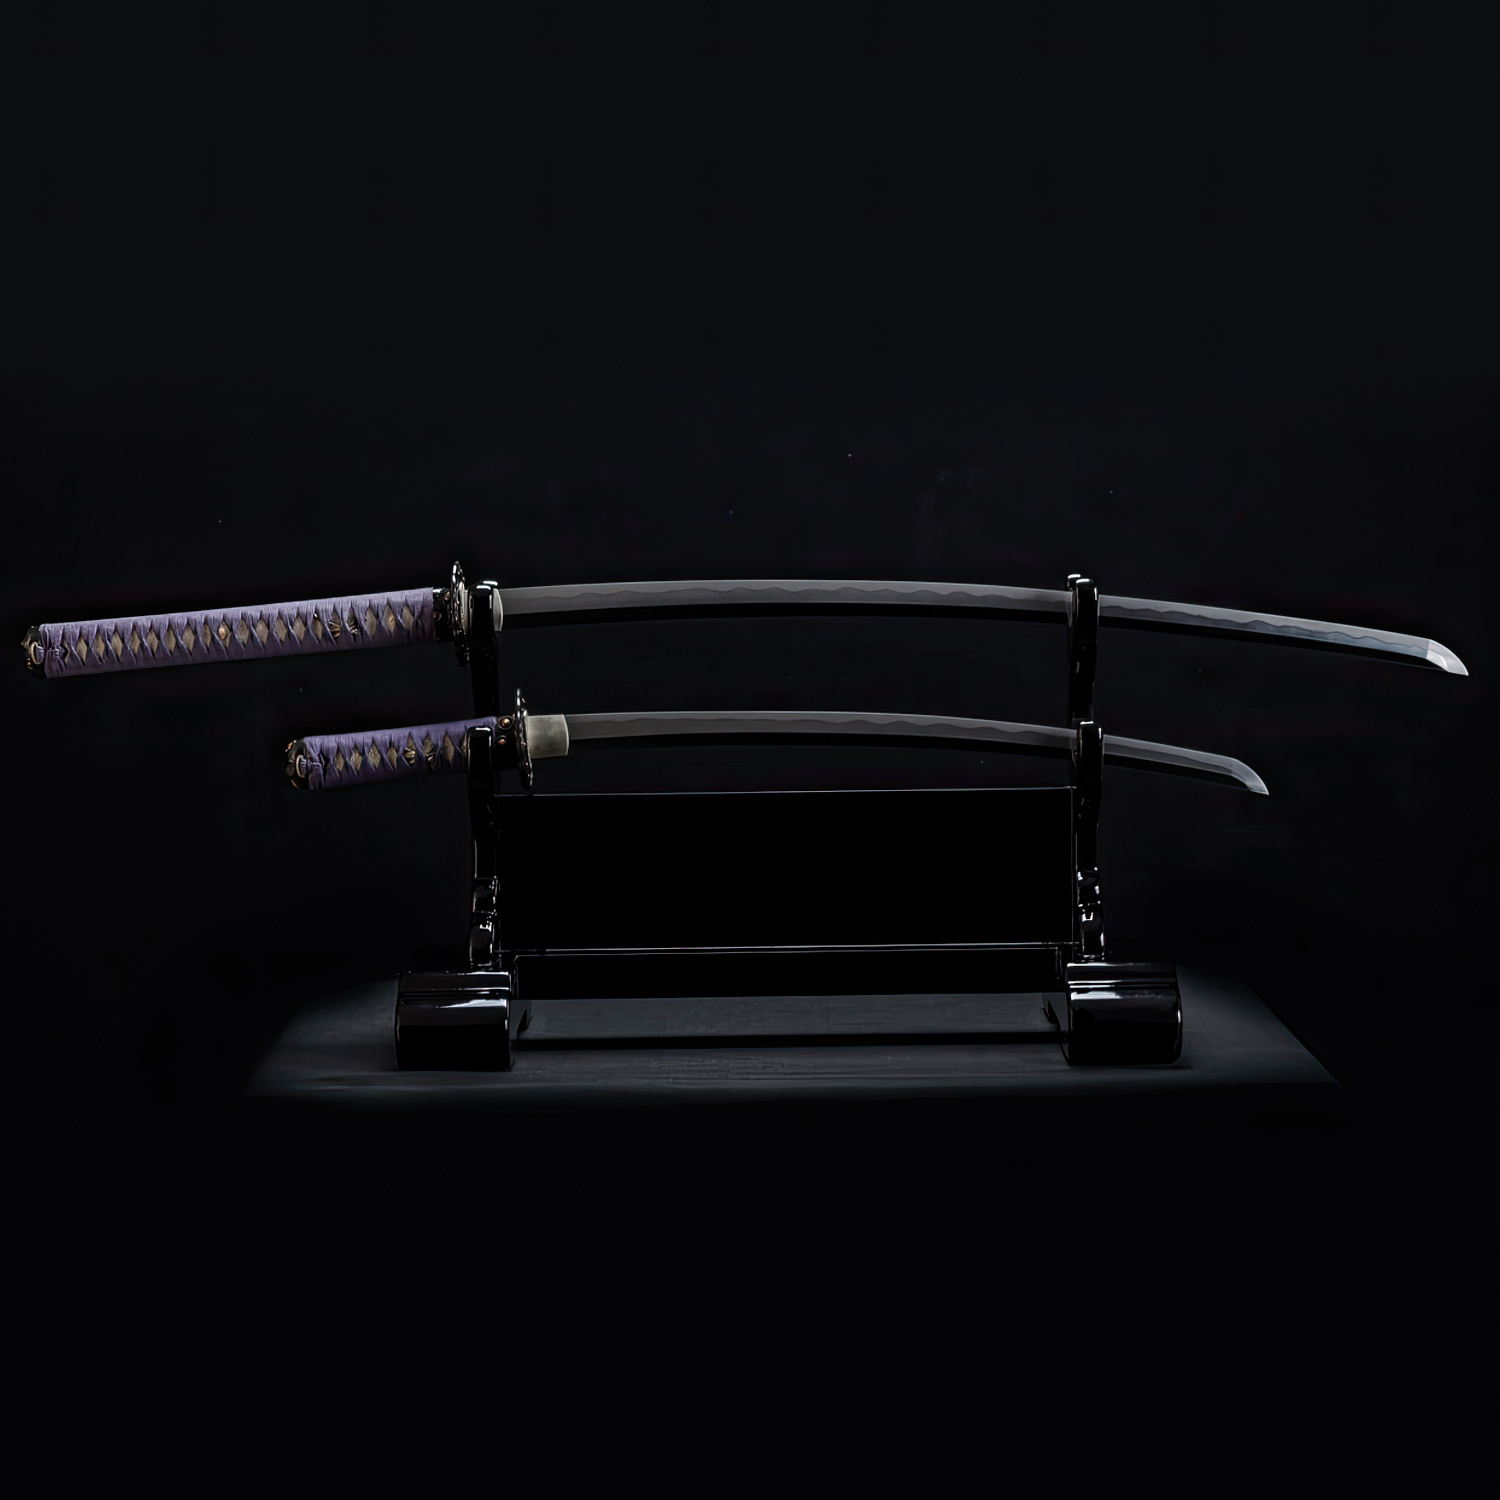 1 Lotus Seed Katana by Dragon King Mounted pair of swords